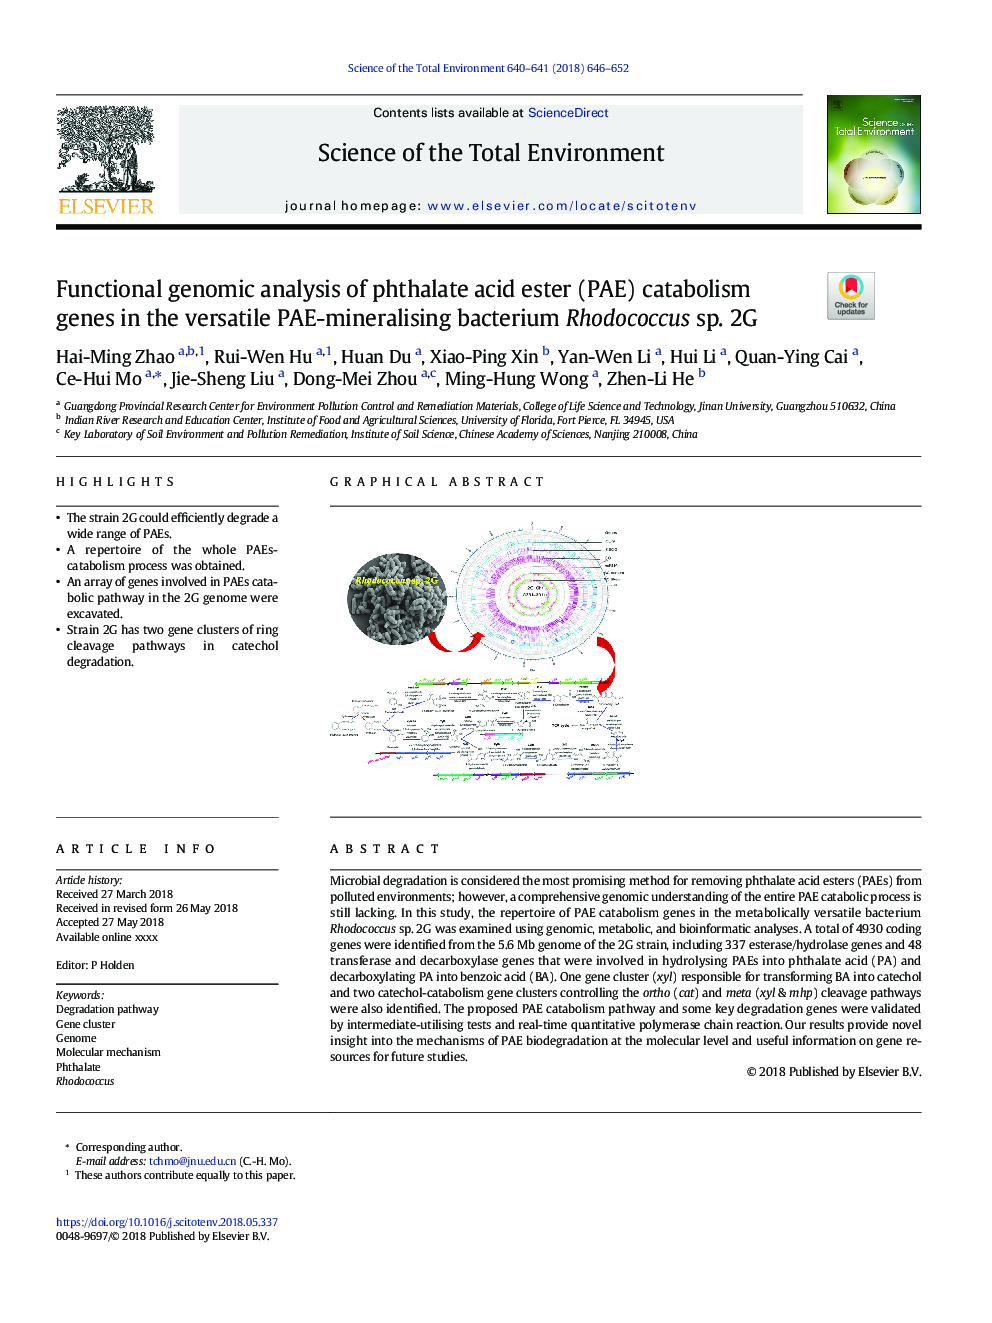 Functional genomic analysis of phthalate acid ester (PAE) catabolism genes in the versatile PAE-mineralising bacterium Rhodococcus sp. 2G